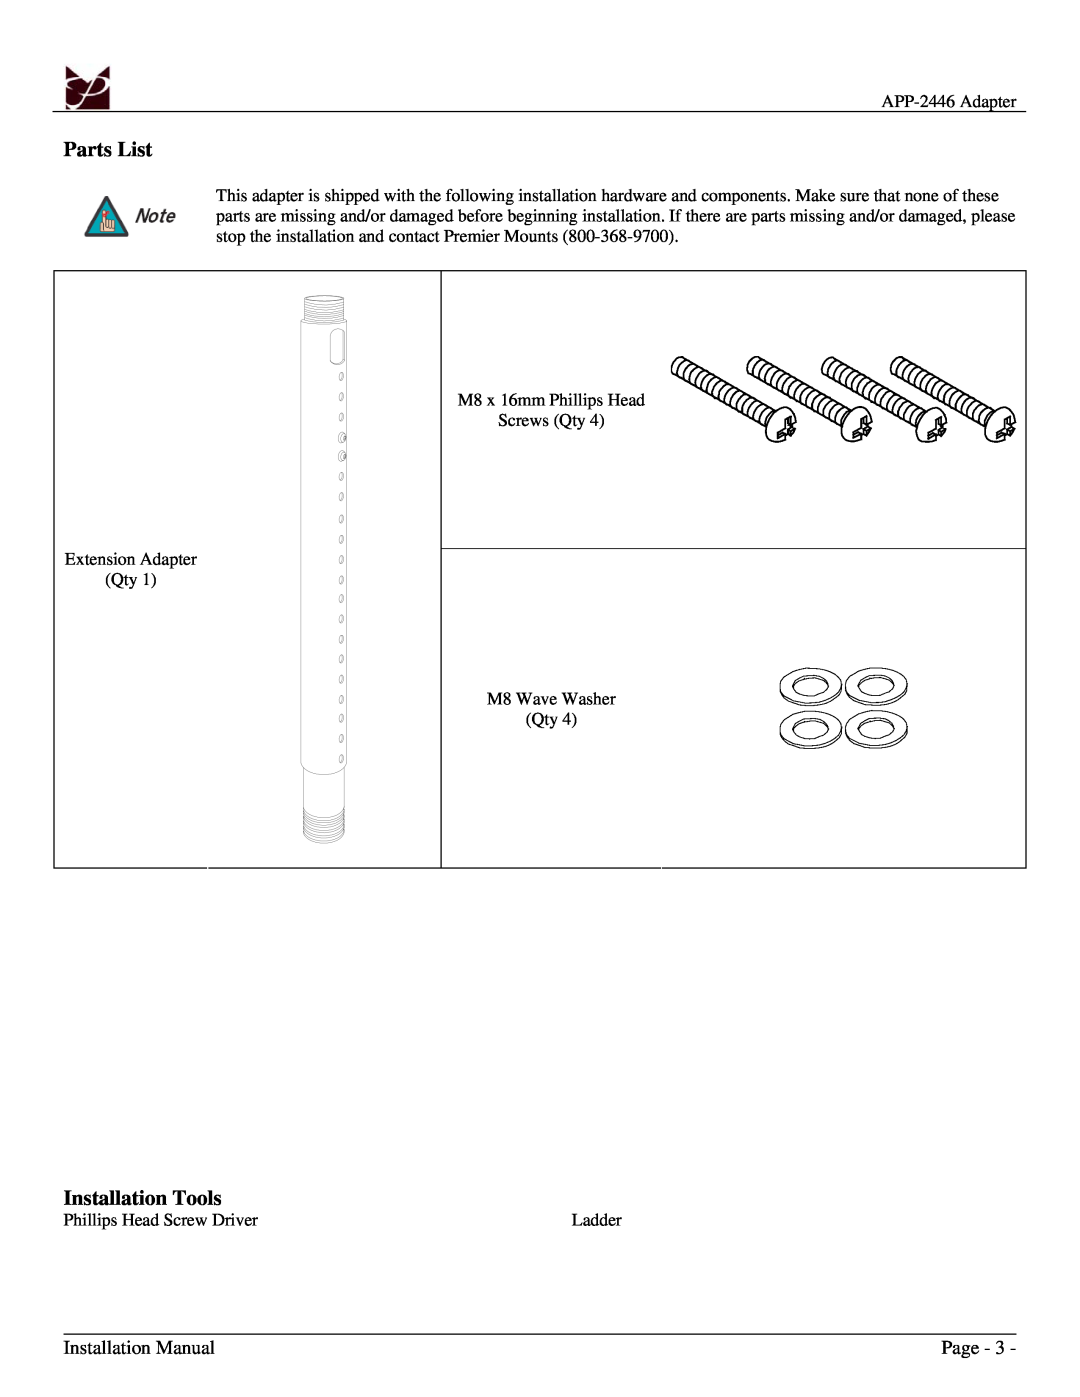 Premier Mounts APP-2446 installation instructions Parts List, Installation Tools, Installation Manual, Page 